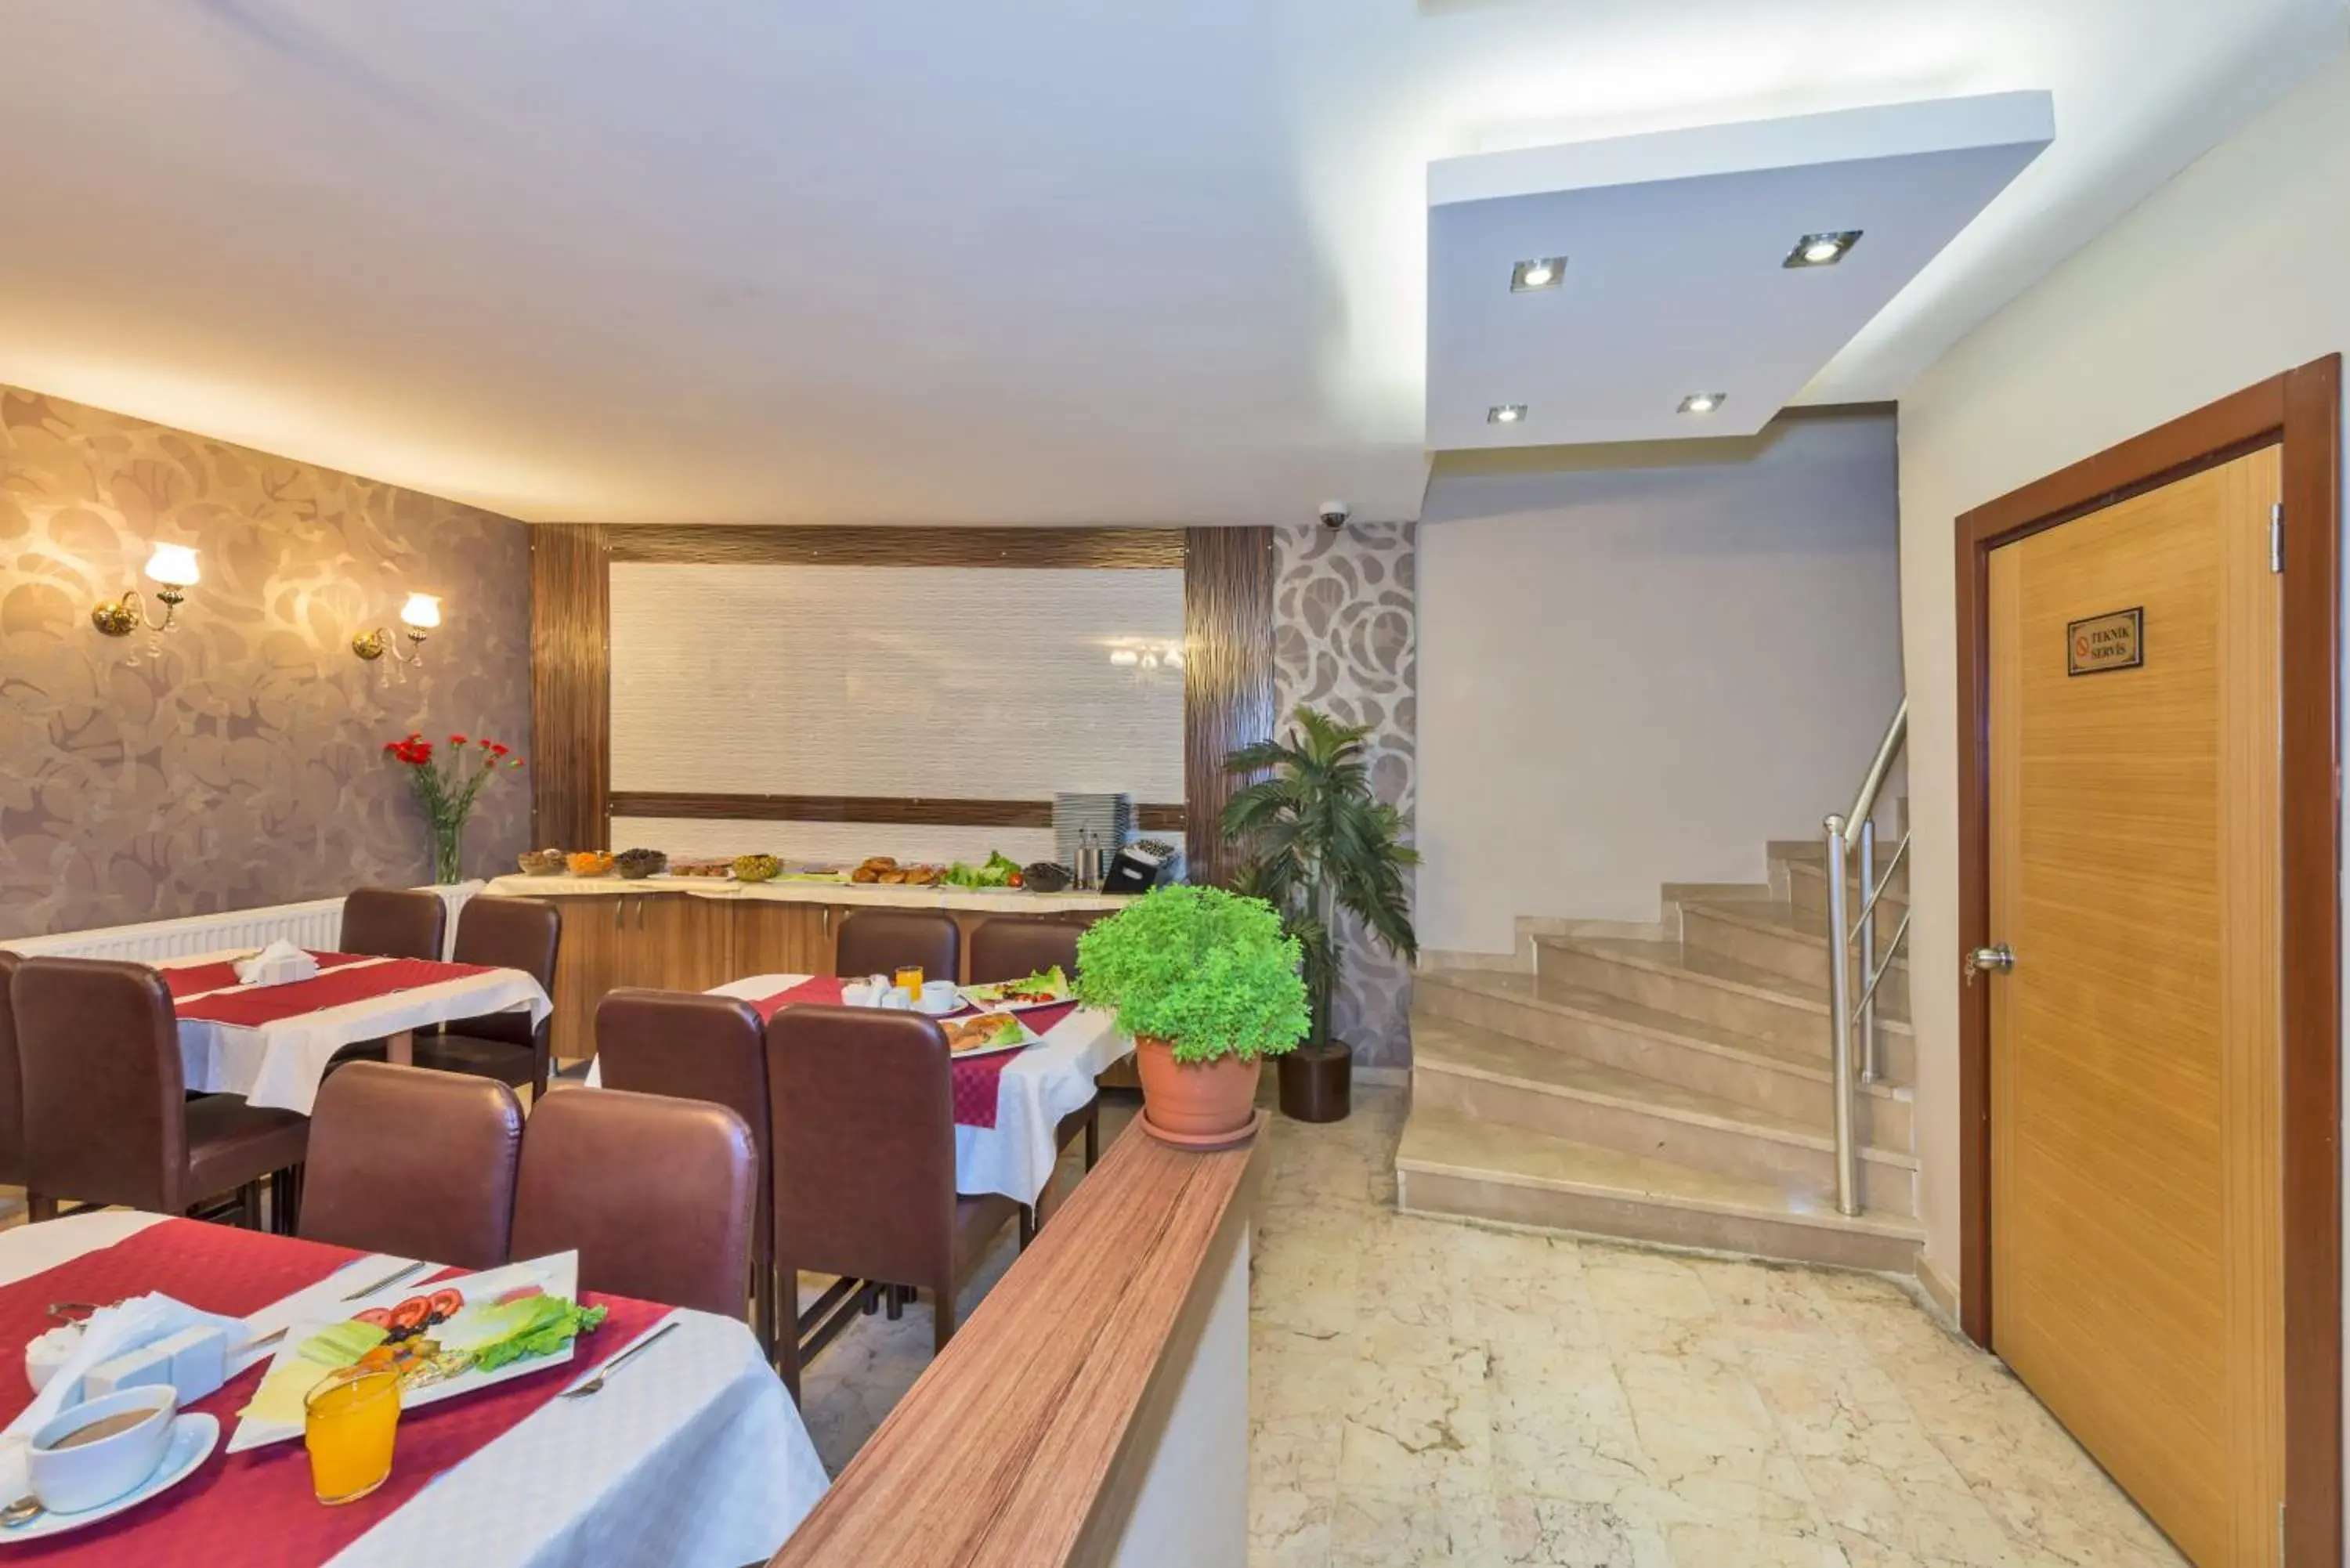 Restaurant/places to eat in Erbazlar Hotel